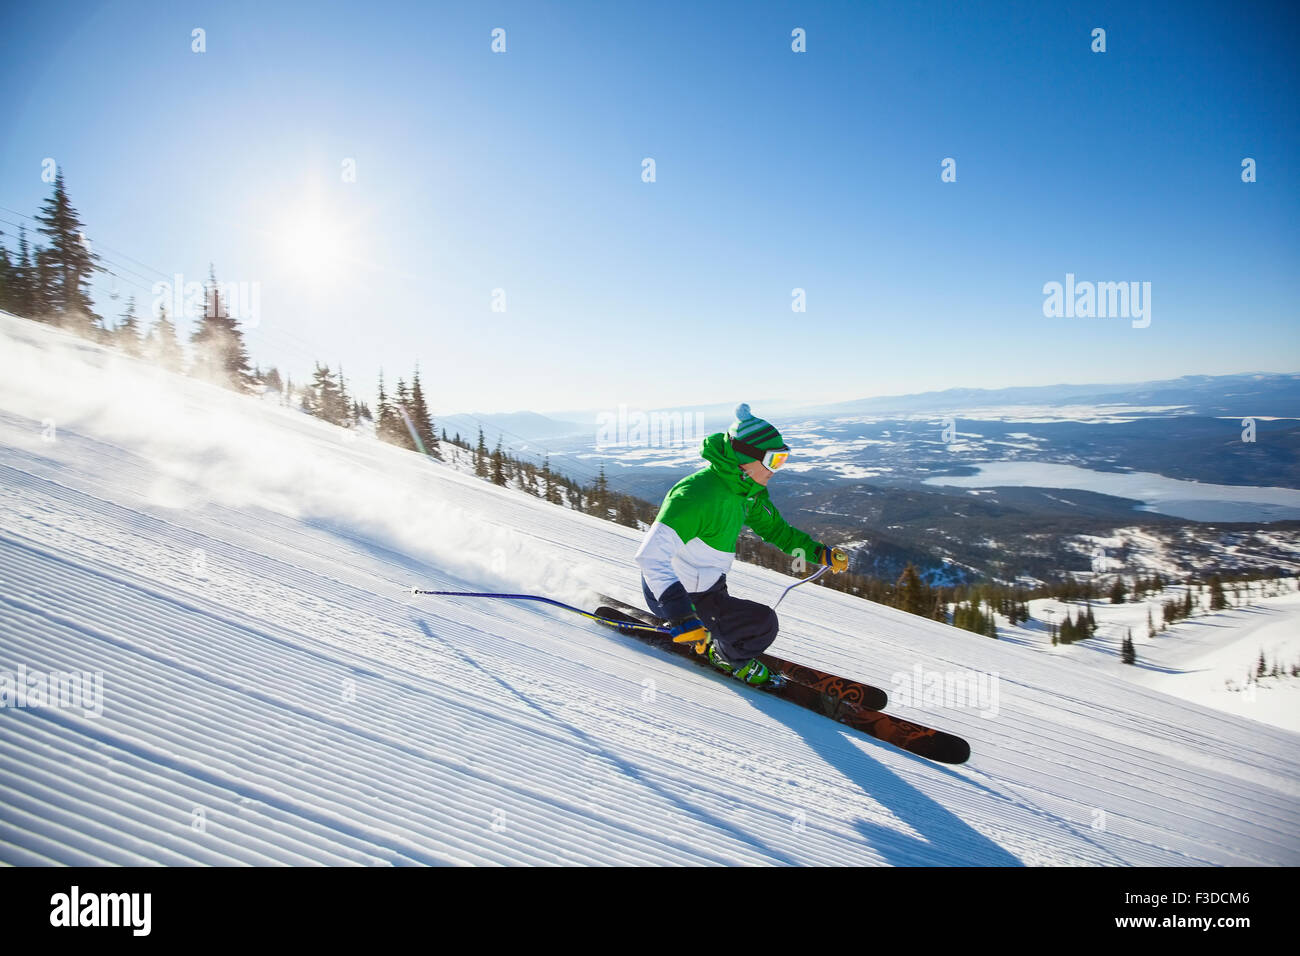 Mature man on ski slope at sunlight Stock Photo